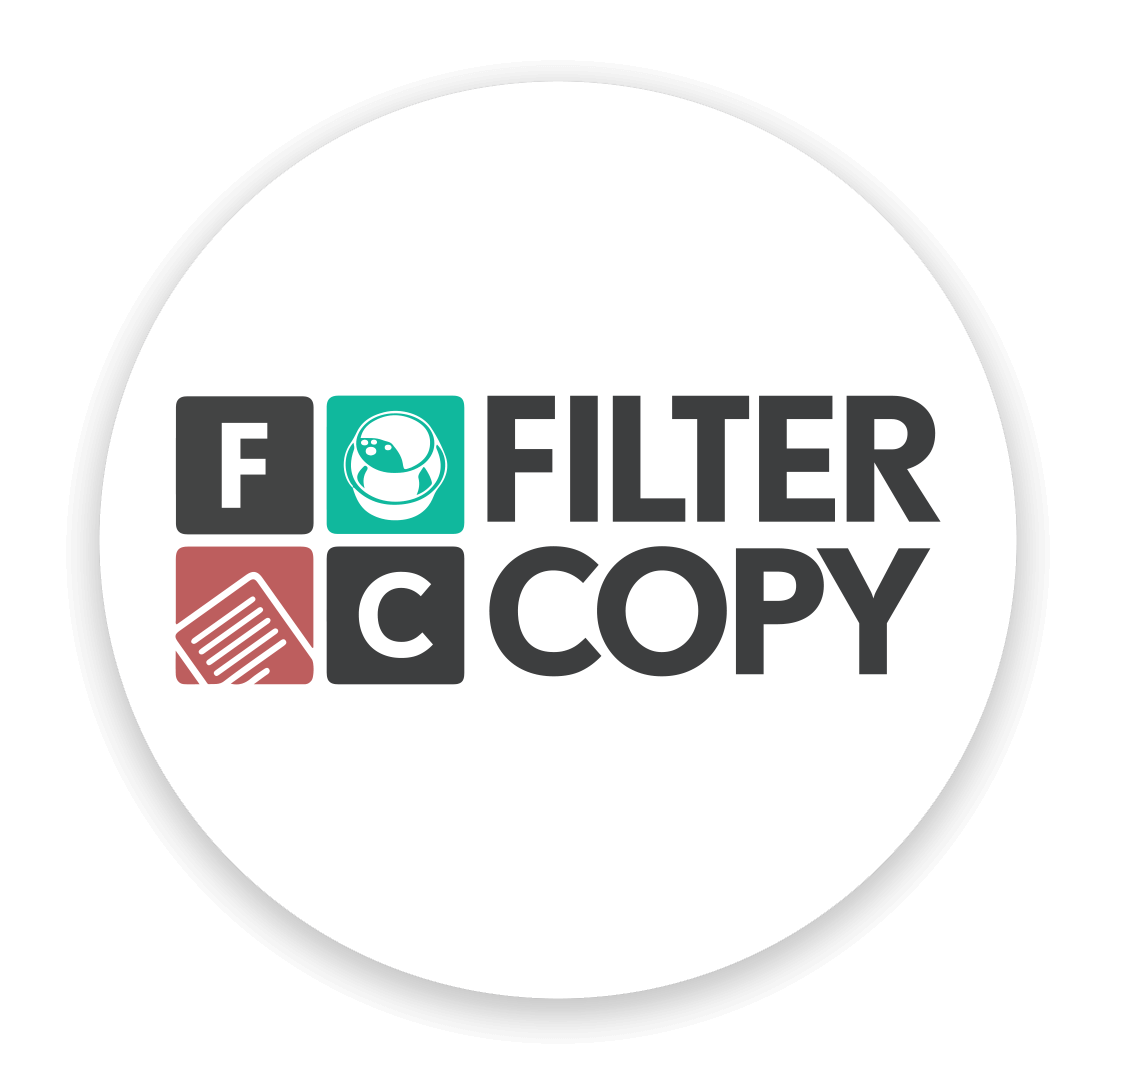 filter-copy